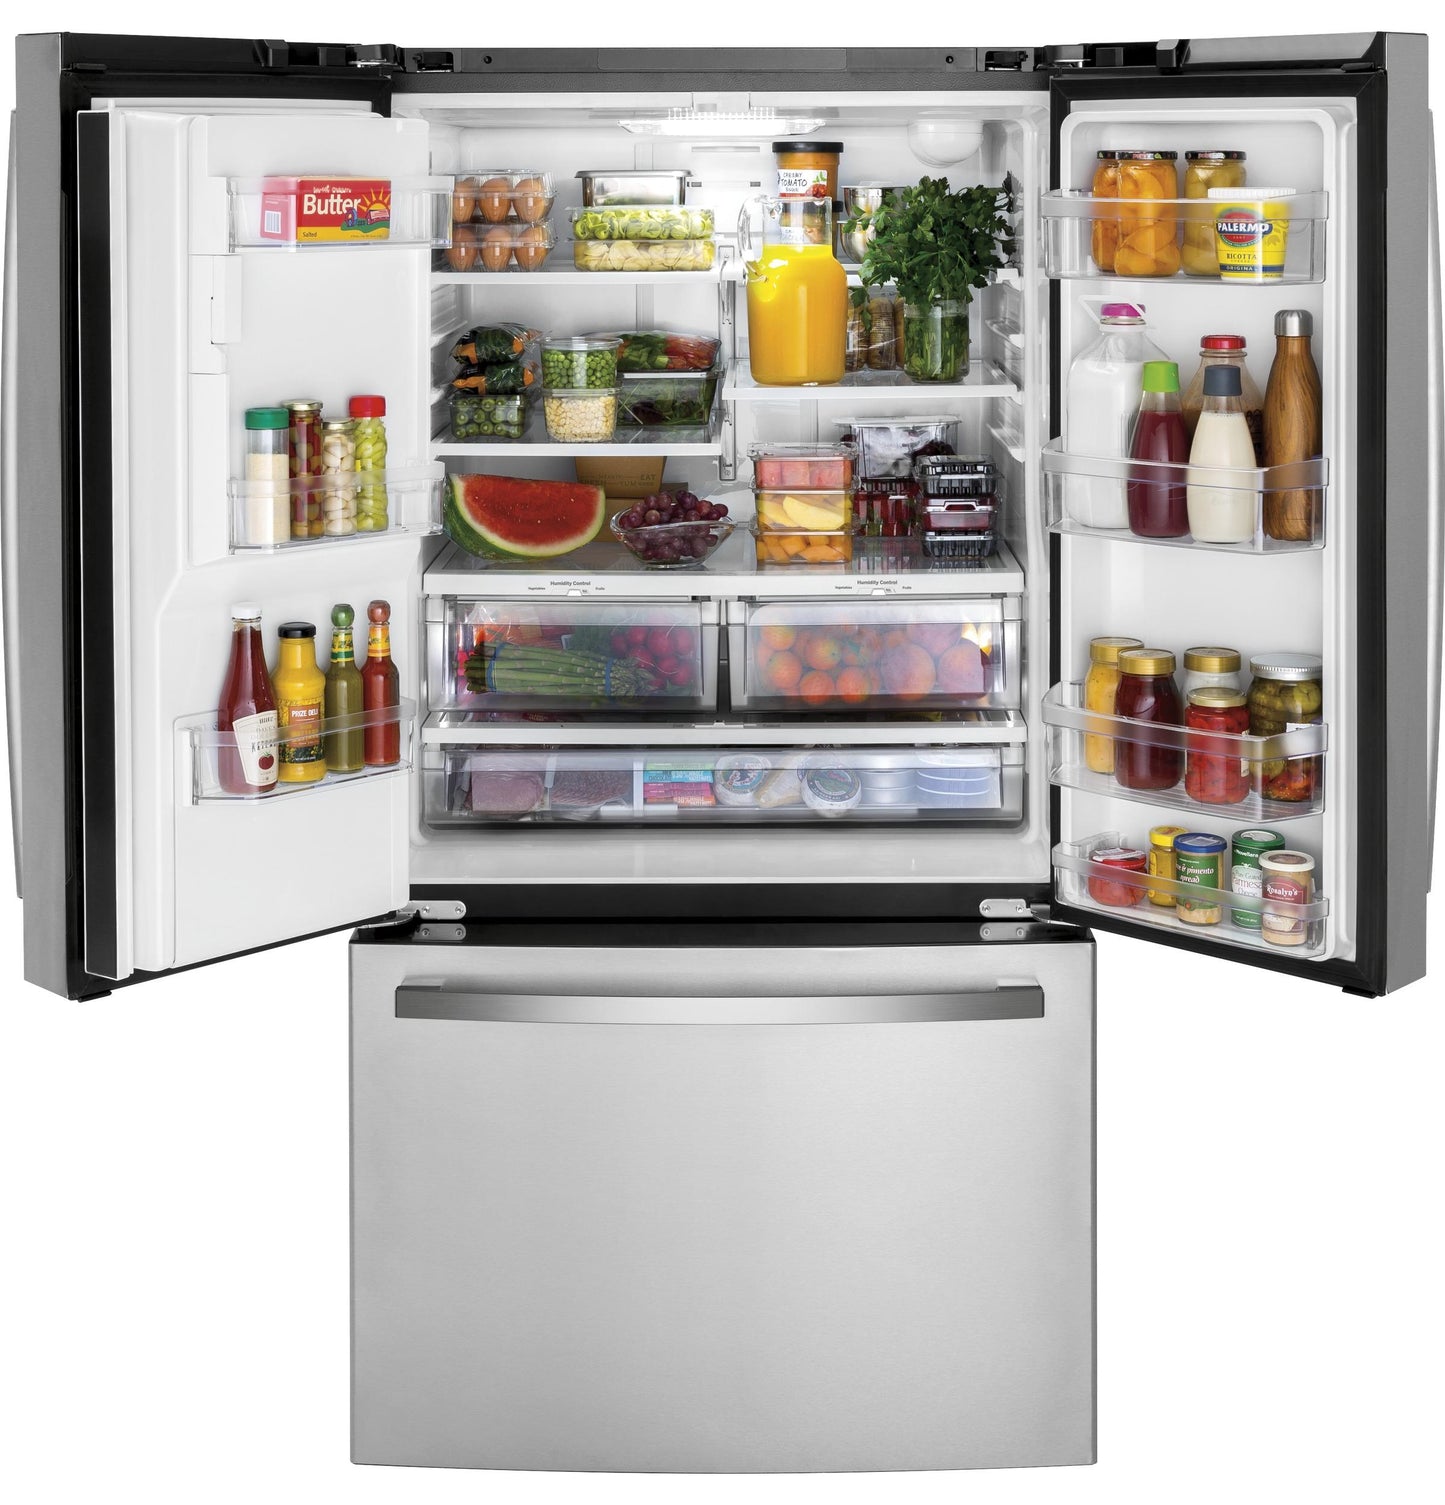 Ge Appliances GYE21JYMFS Ge® Energy Star® 20.6 Cu. Ft. Fingerprint Resistant Counter-Depth French-Door Refrigerator